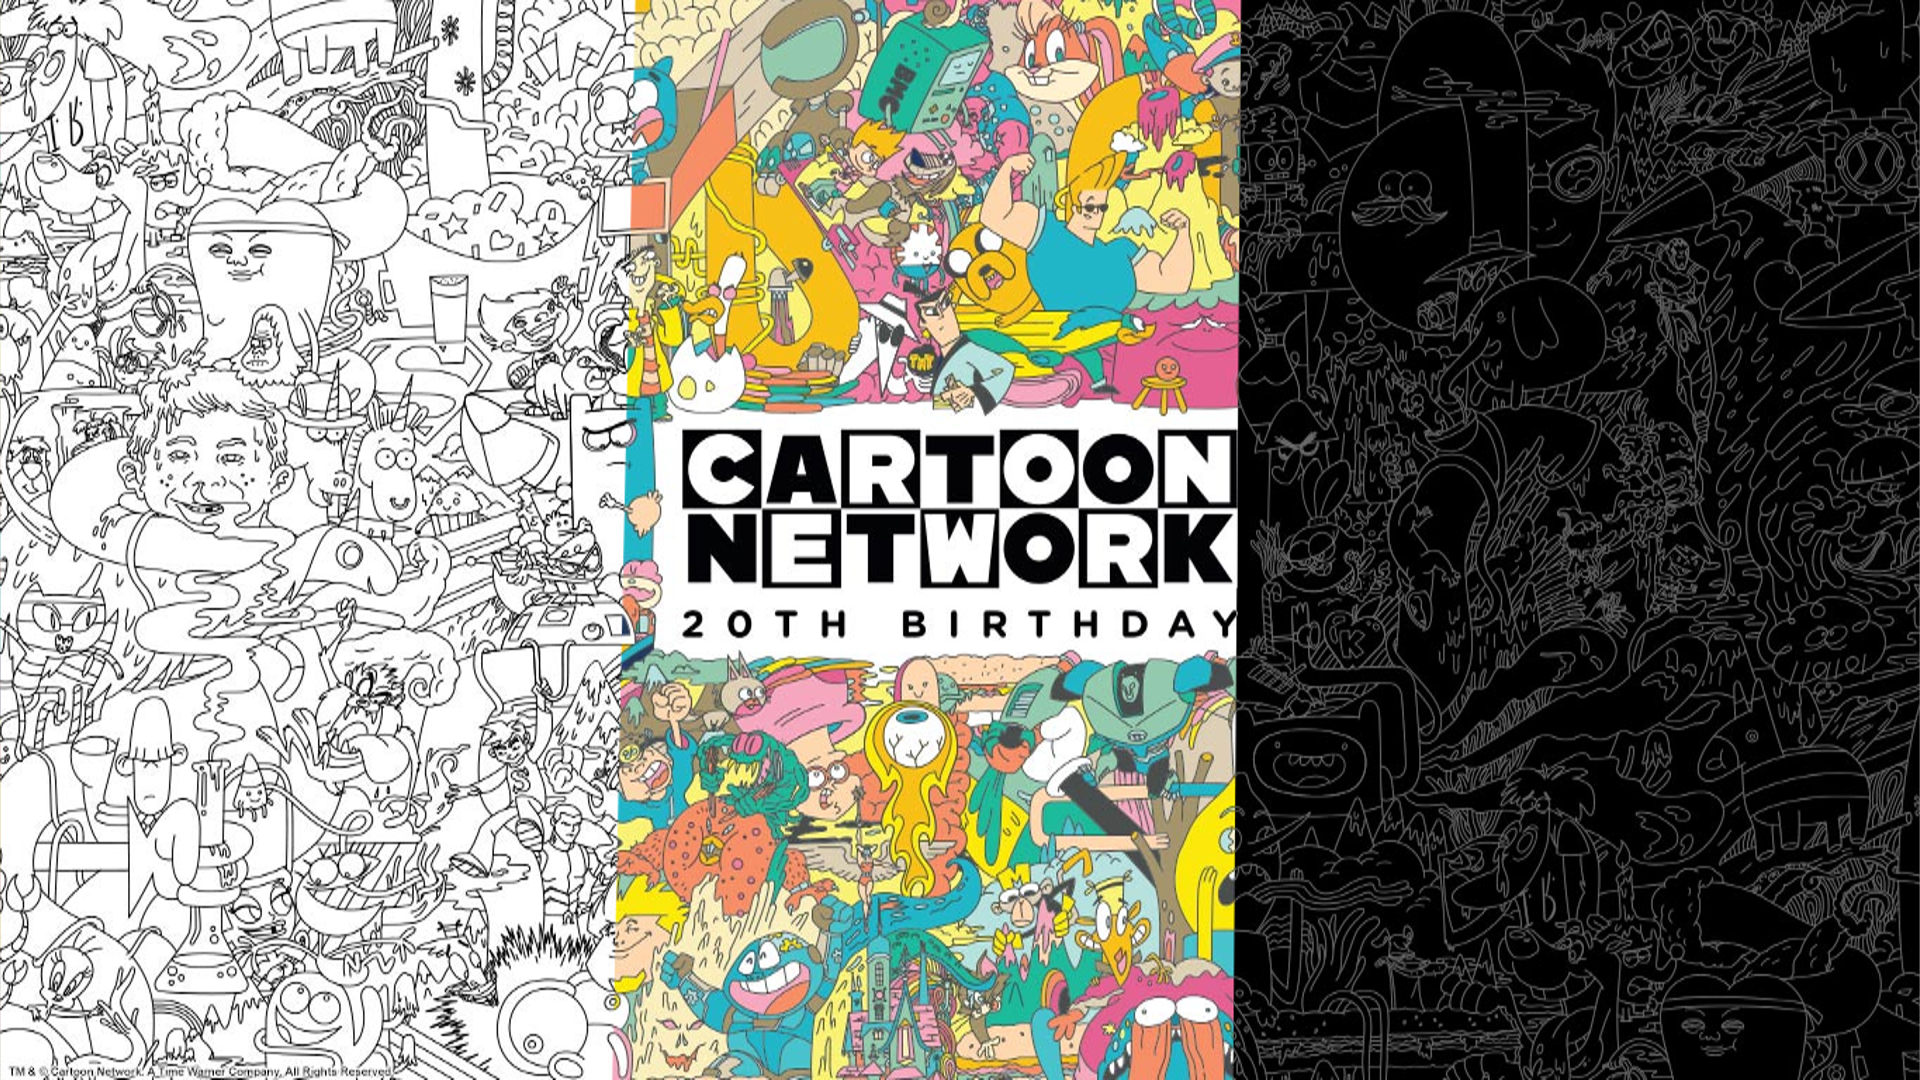 Cartoon Network Wallpapers Group (76+)